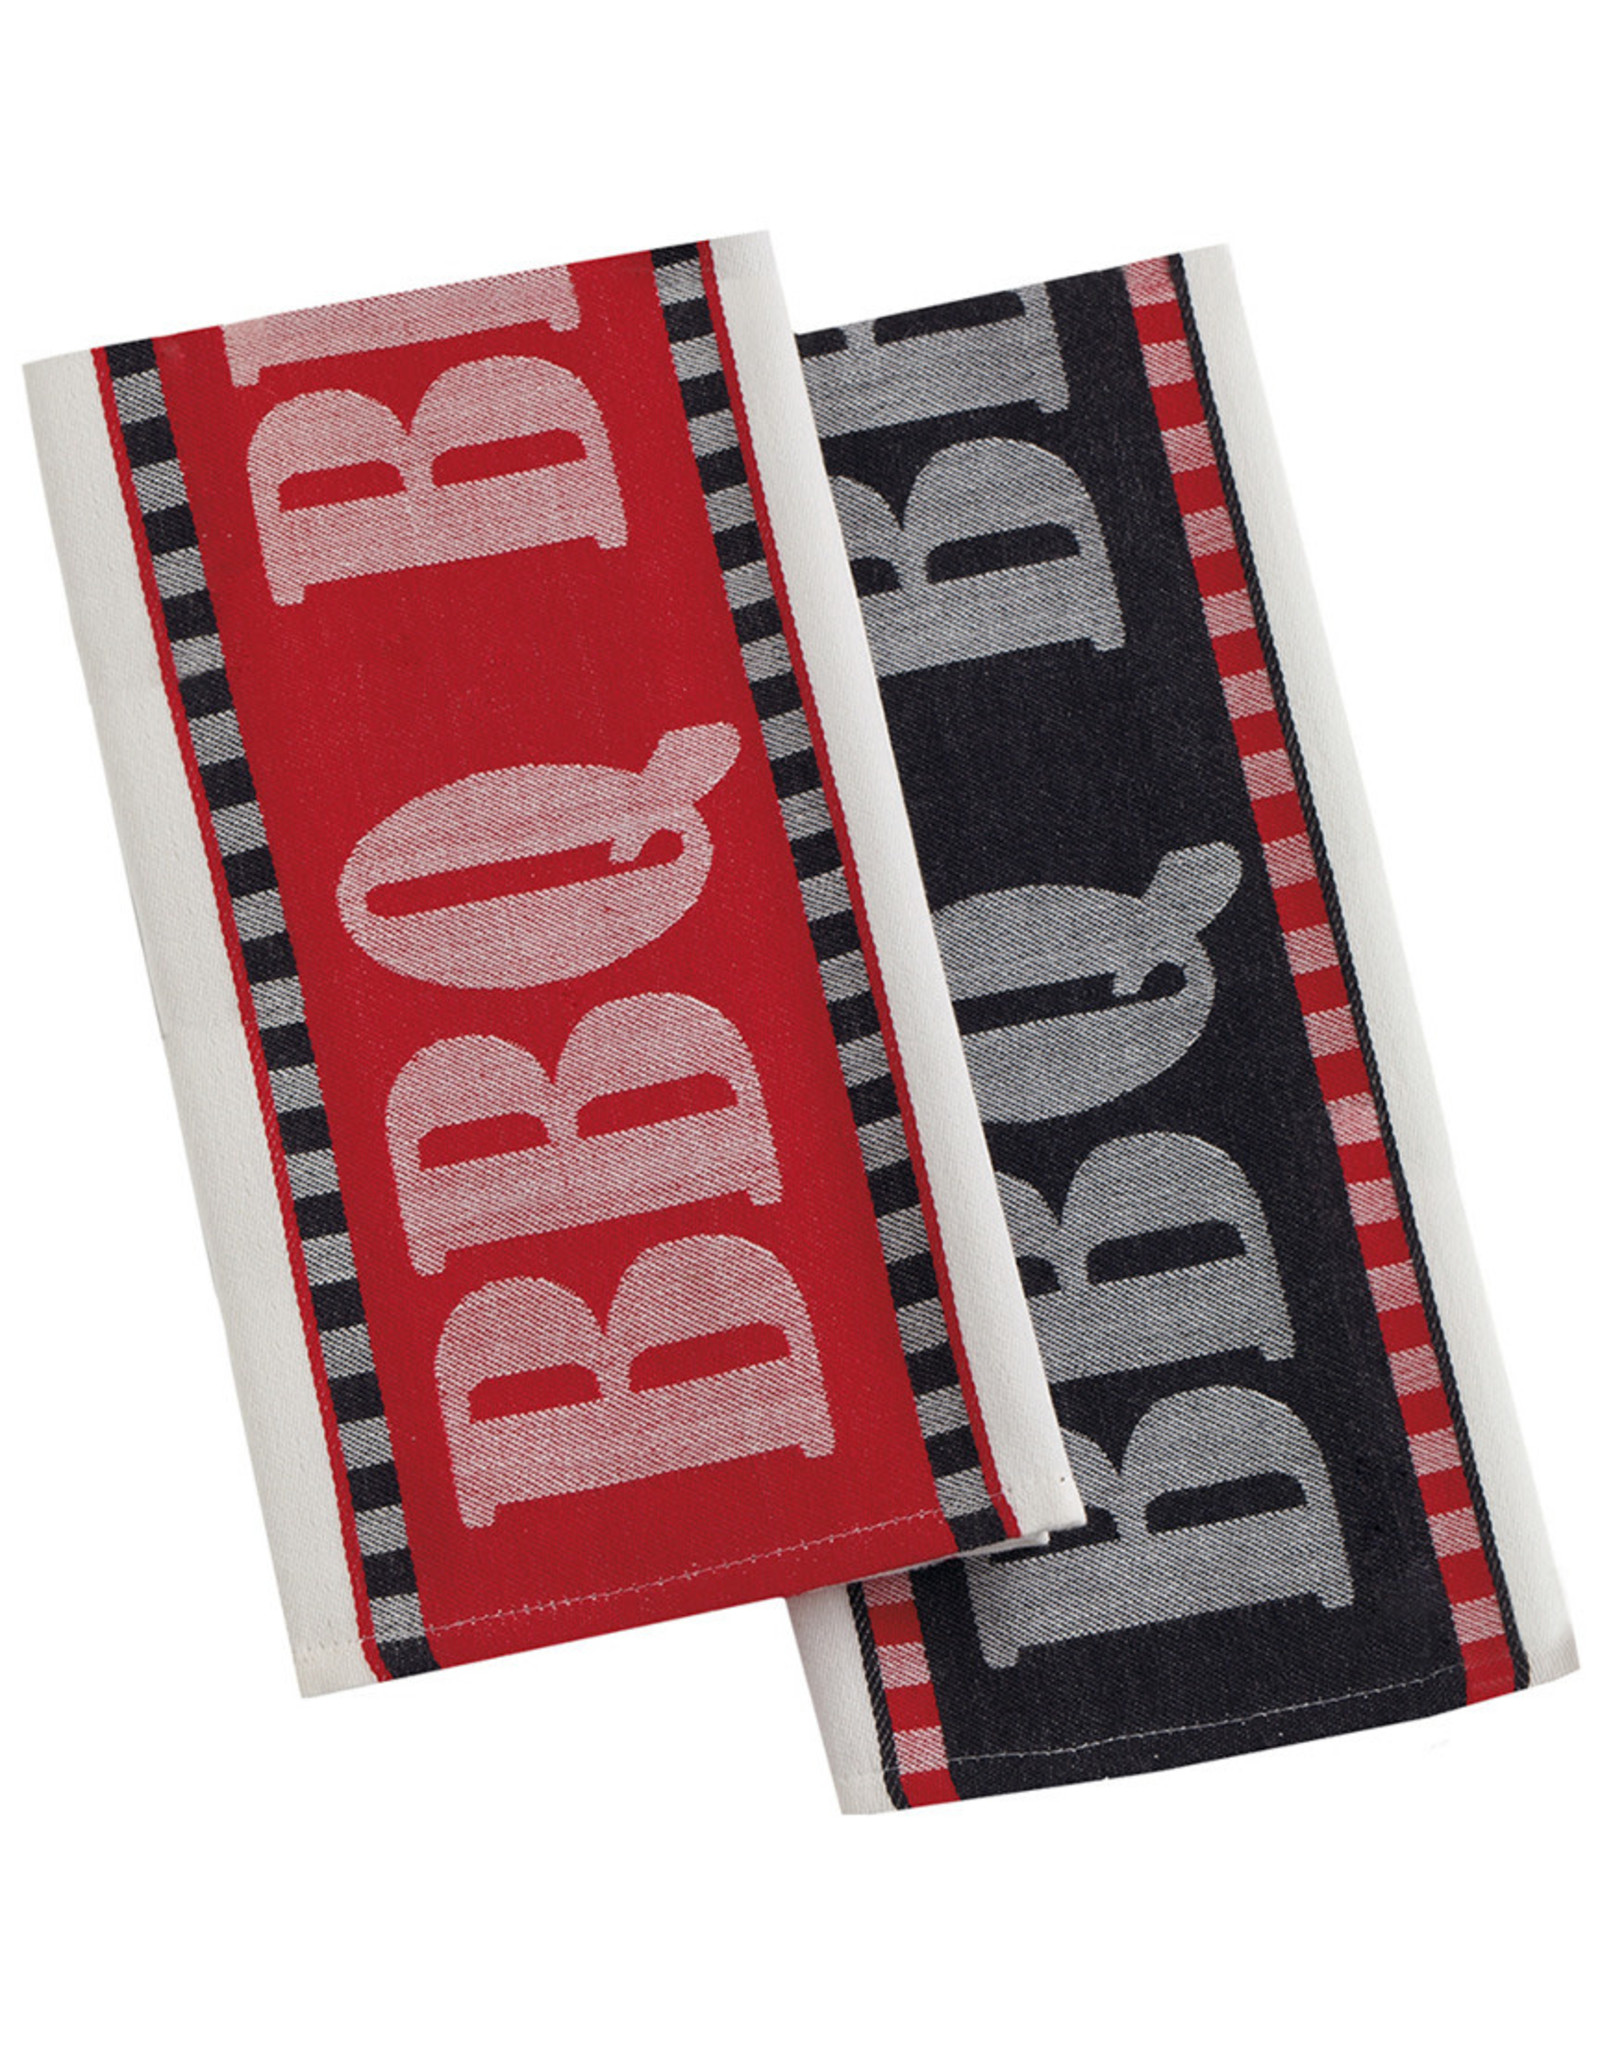 Design Imports Red BBQ Kitchen Towel